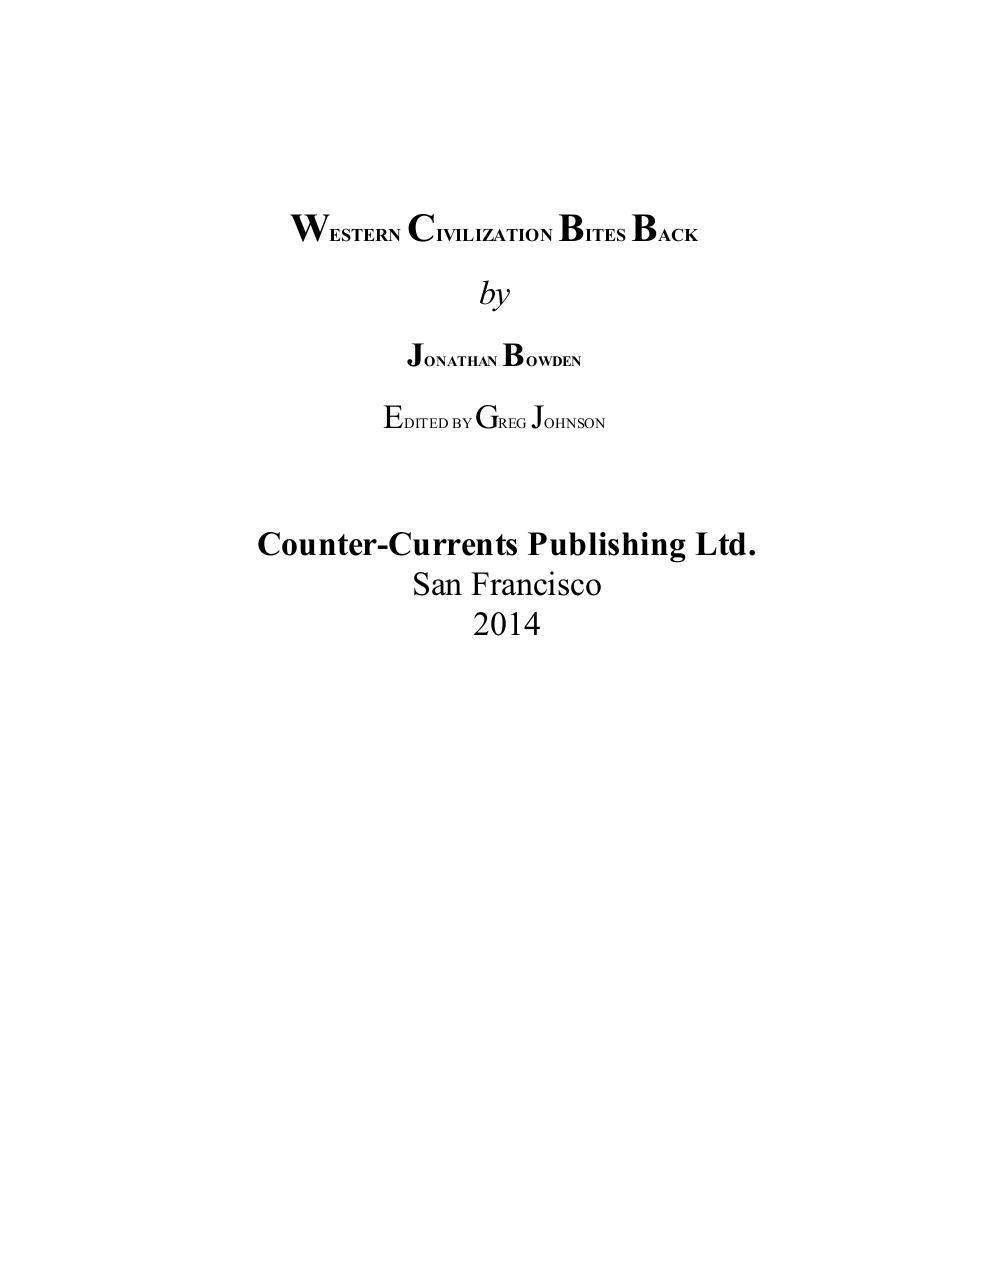 bowden- western civ bites back.pdf - page 2/226